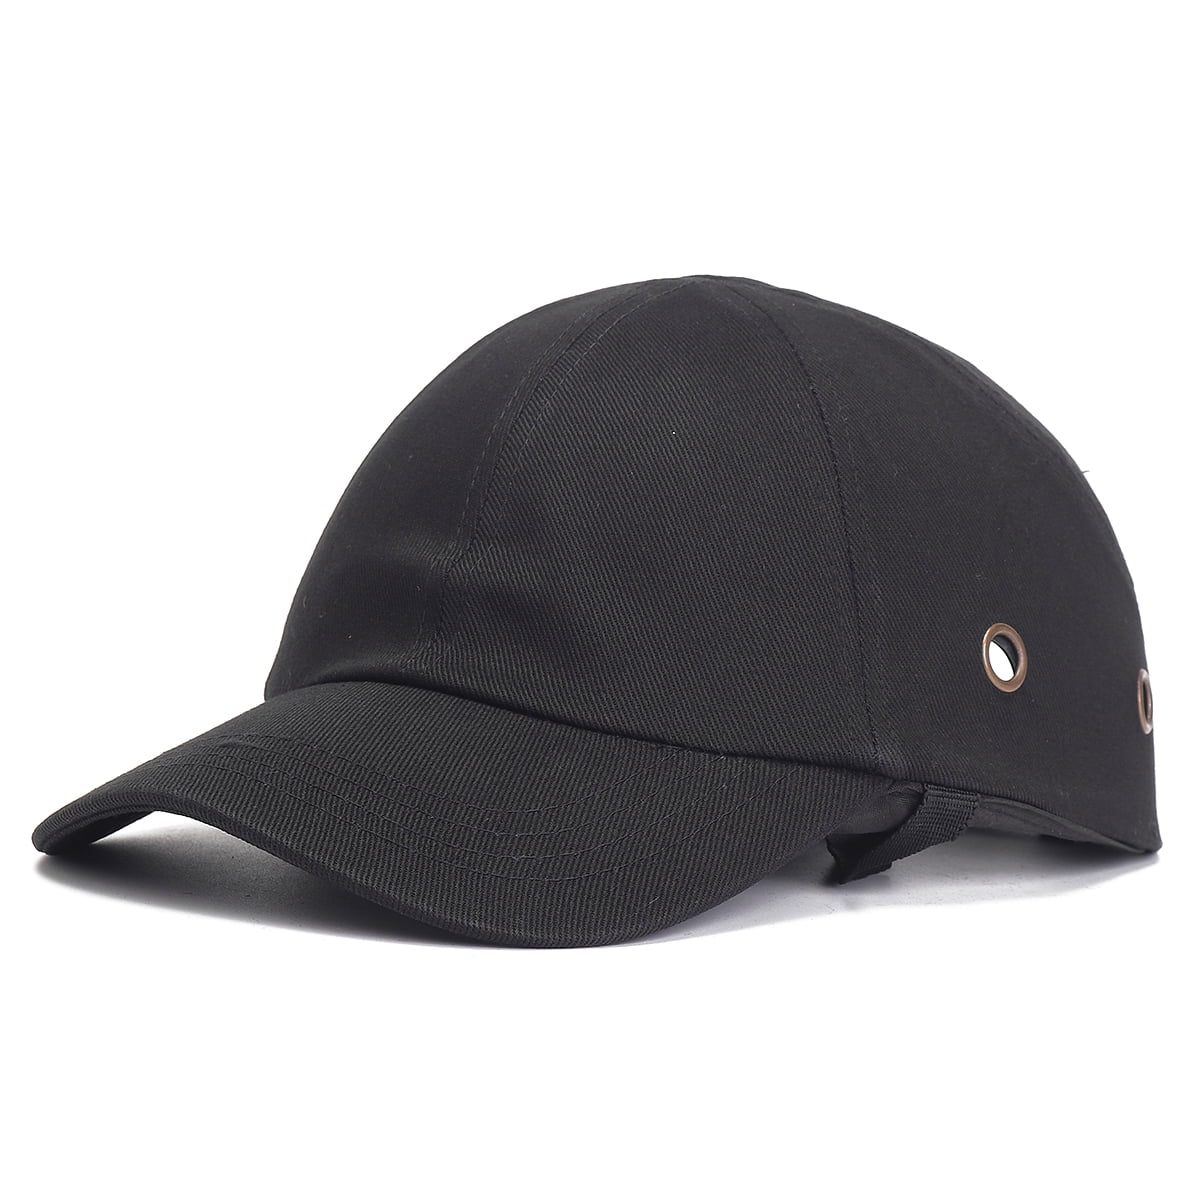 Unisex Accessories Hats Black Baseball Bump Caps Lightweight Safety ...